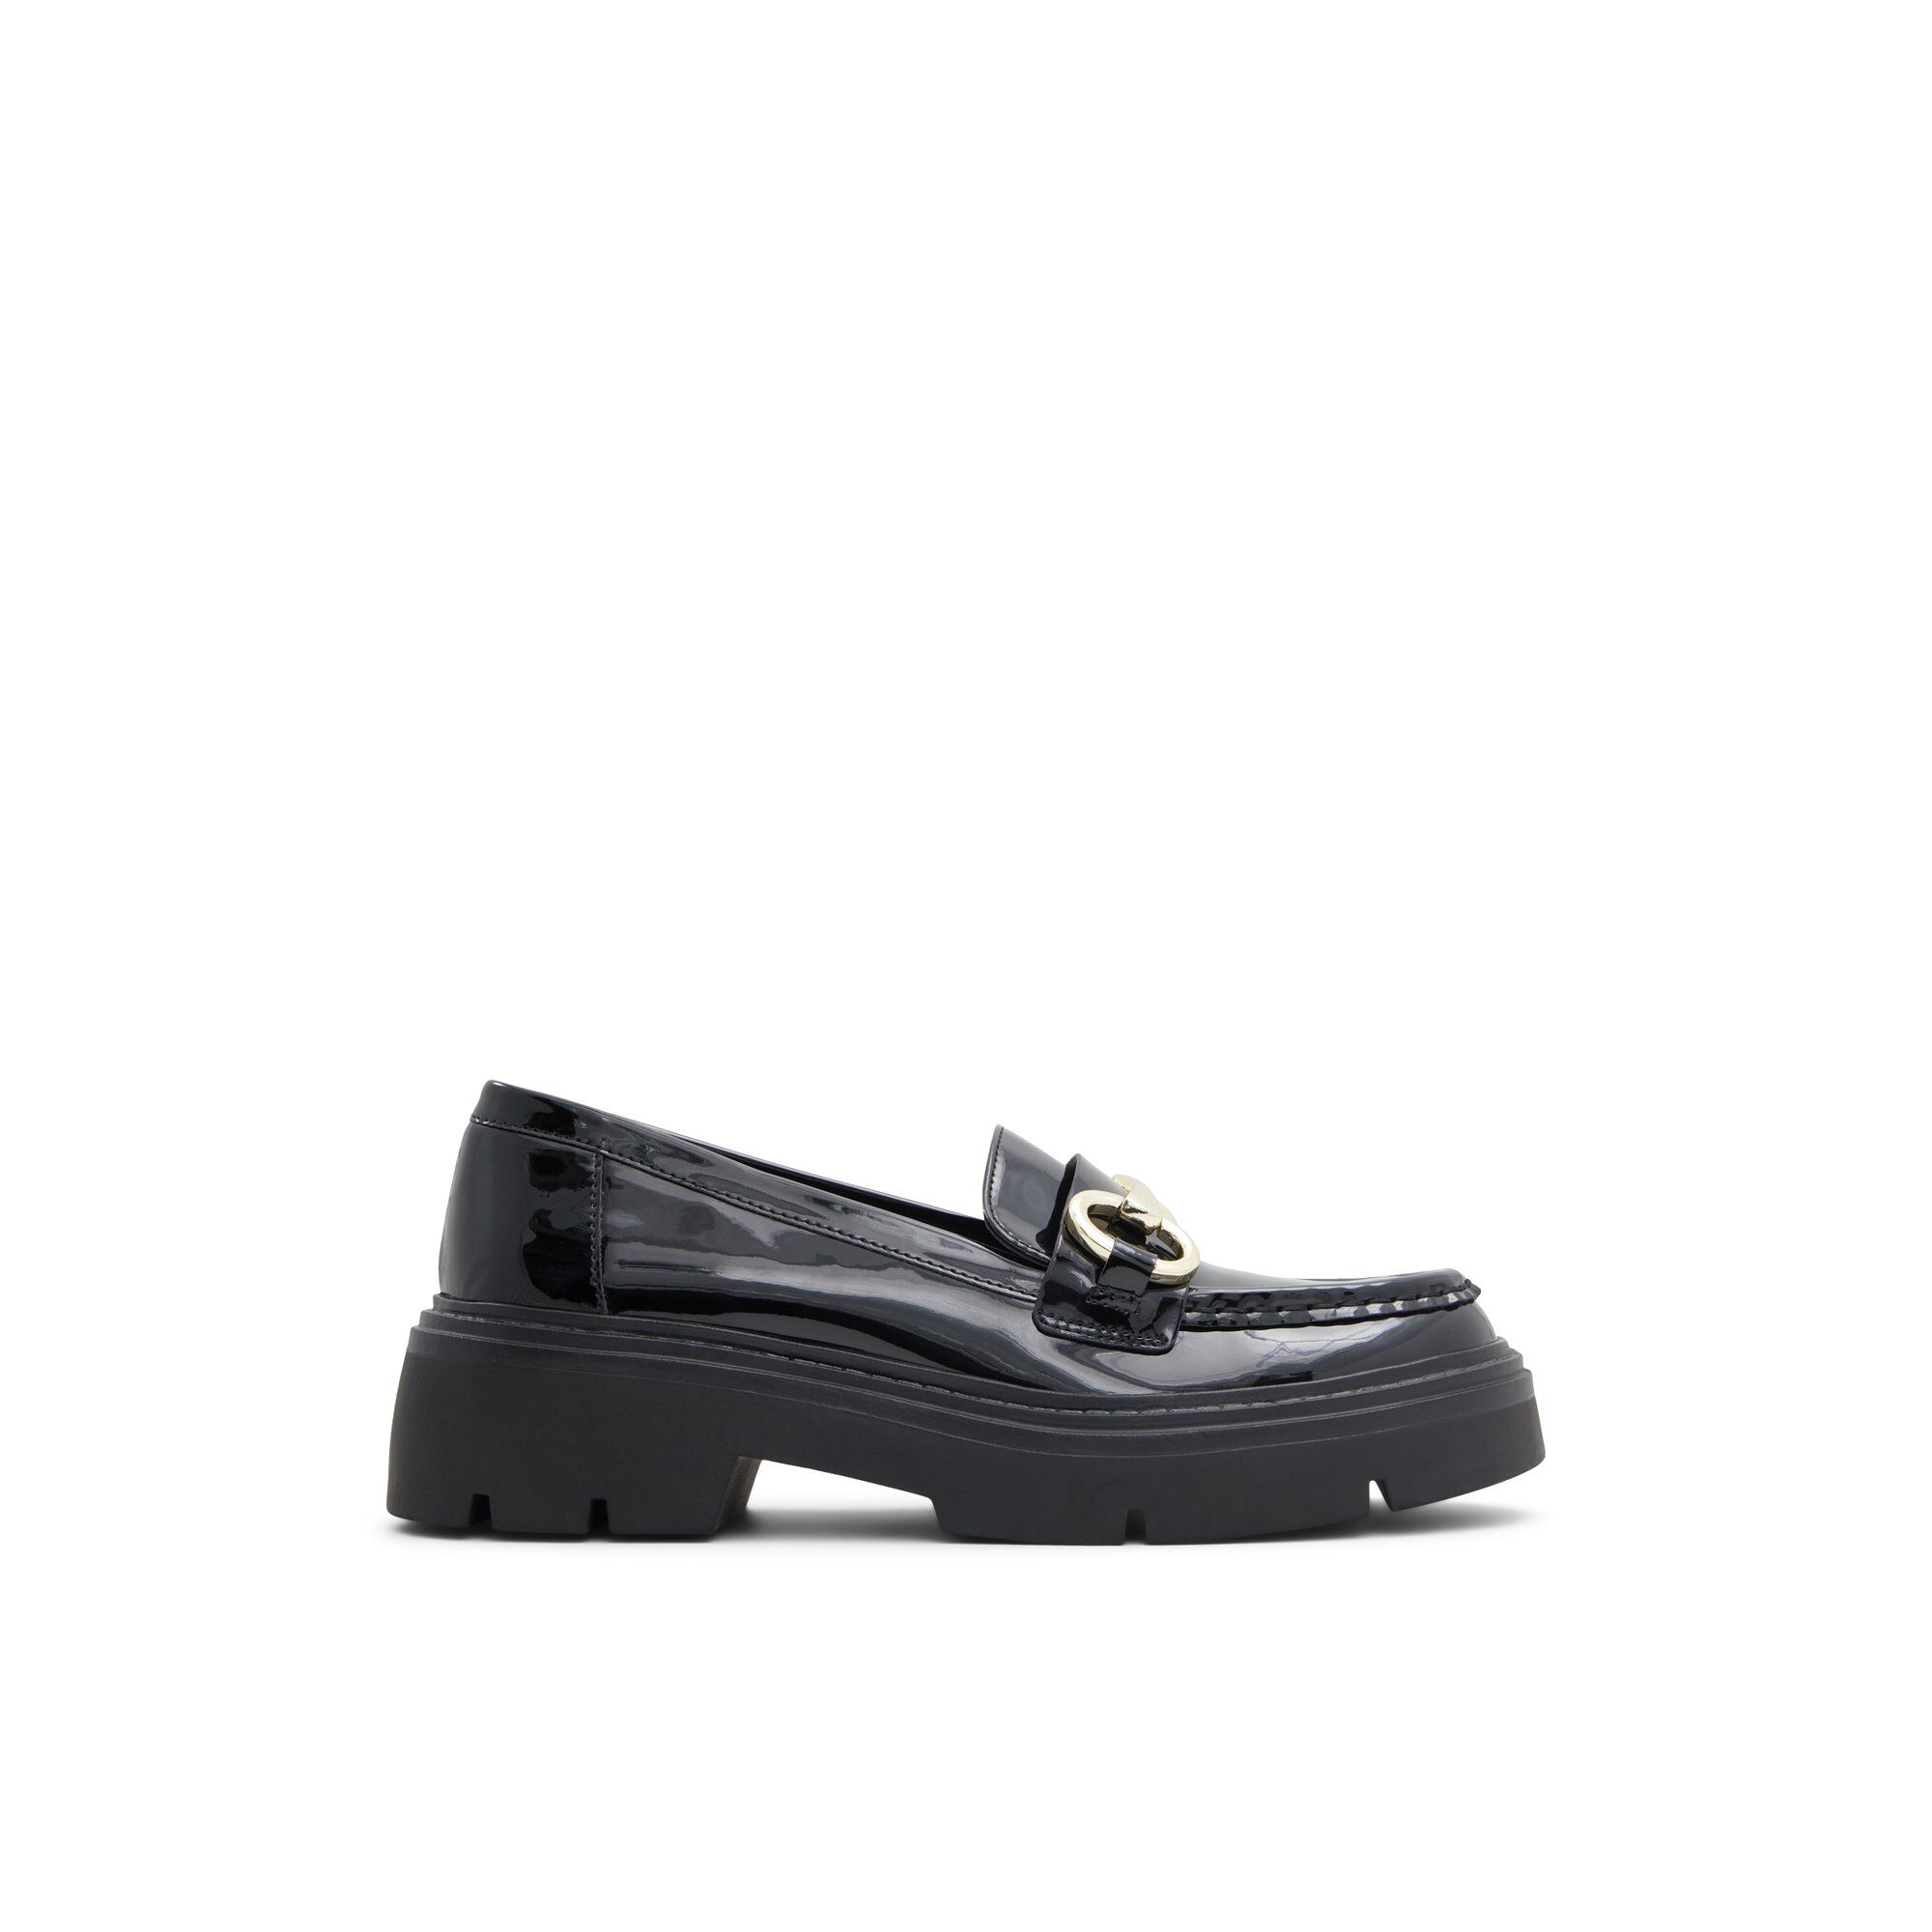 ALDO Miska - Women's Loafer - Black, Size 8.5